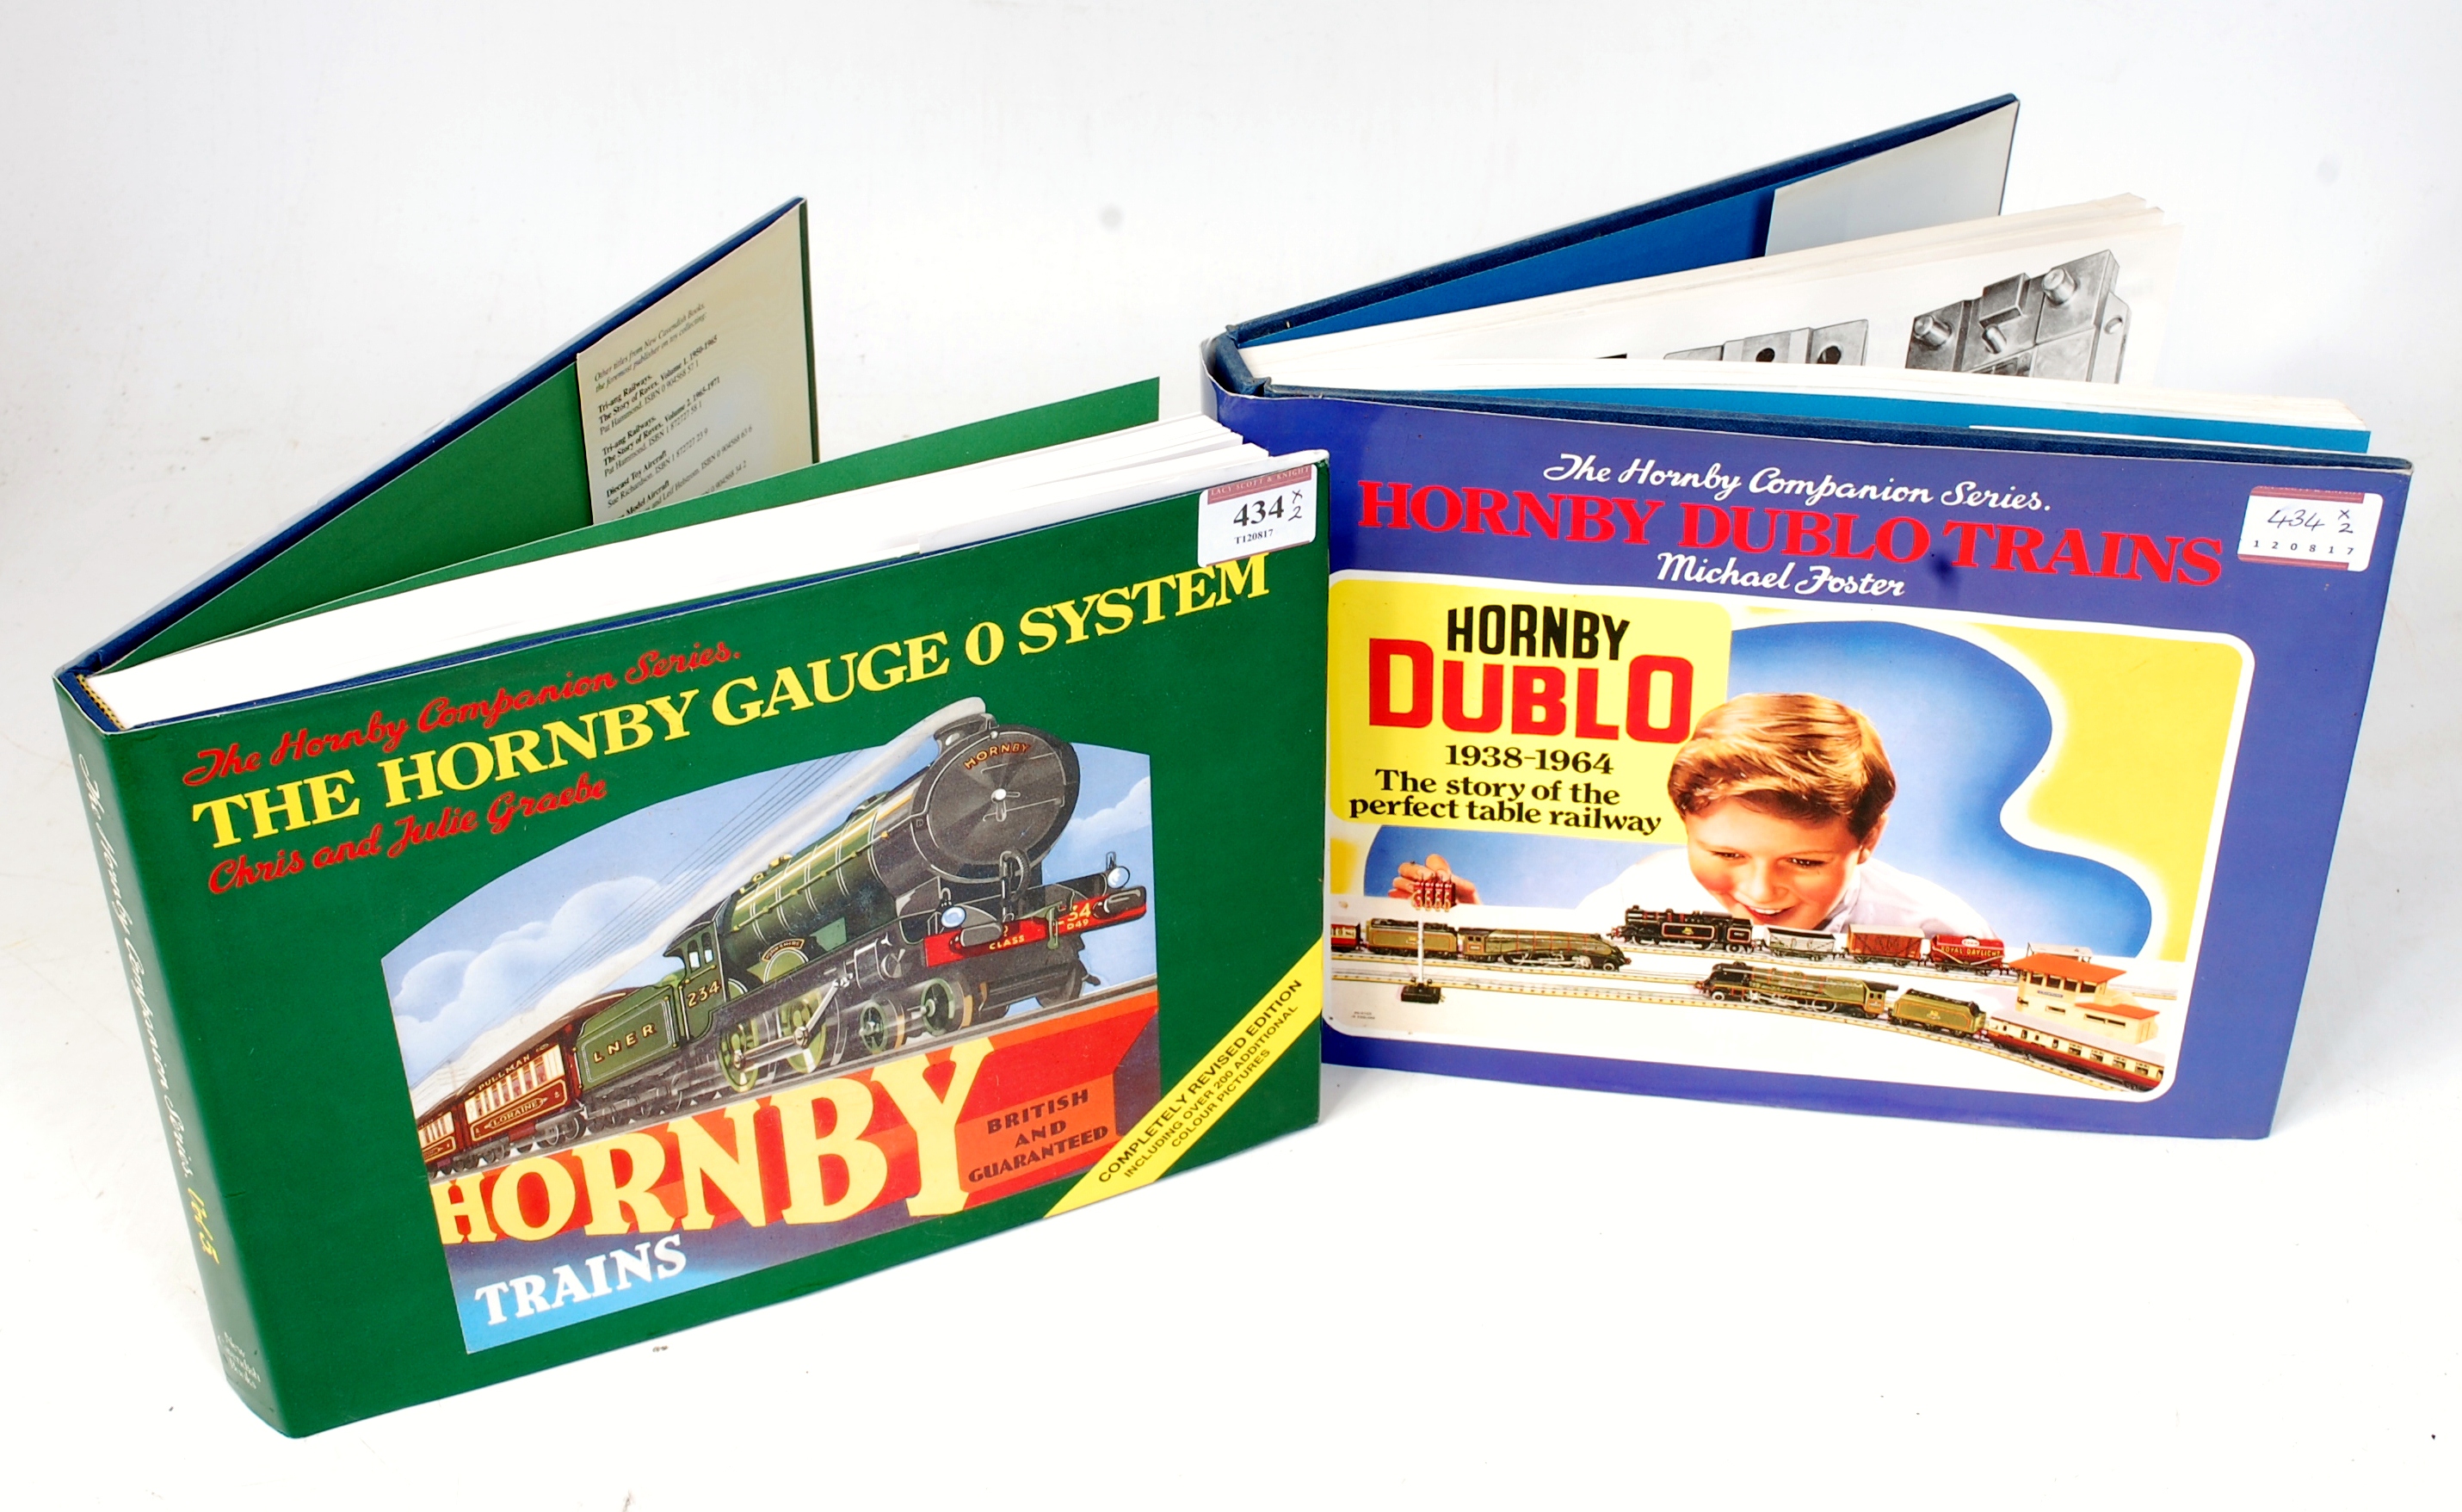 'The Hornby Gauge 0 System' revised edition by Chris & Julie Graebe,